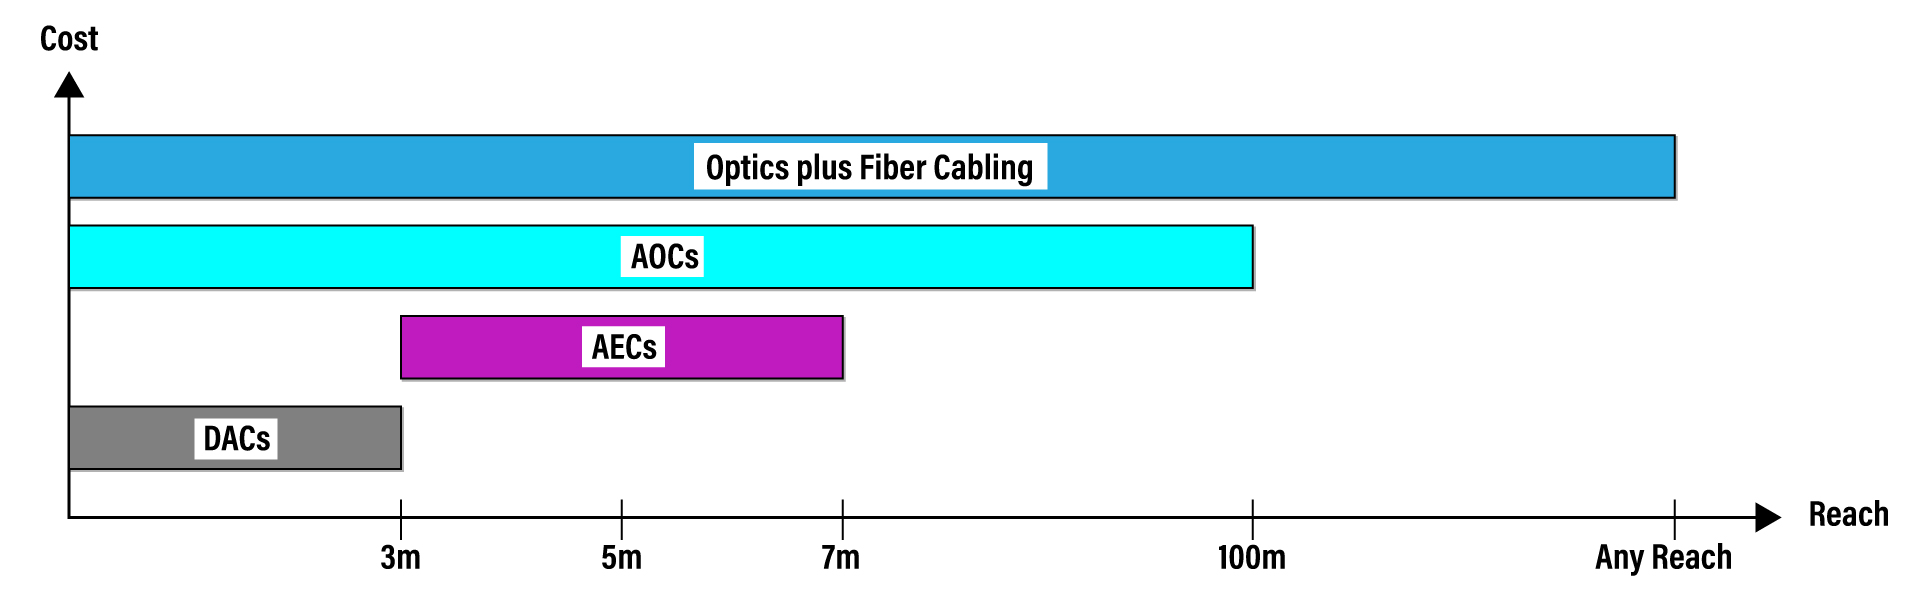 An illustration comparing cost and reach AOCs, AECs, DACs and optics plus fiber cabling.